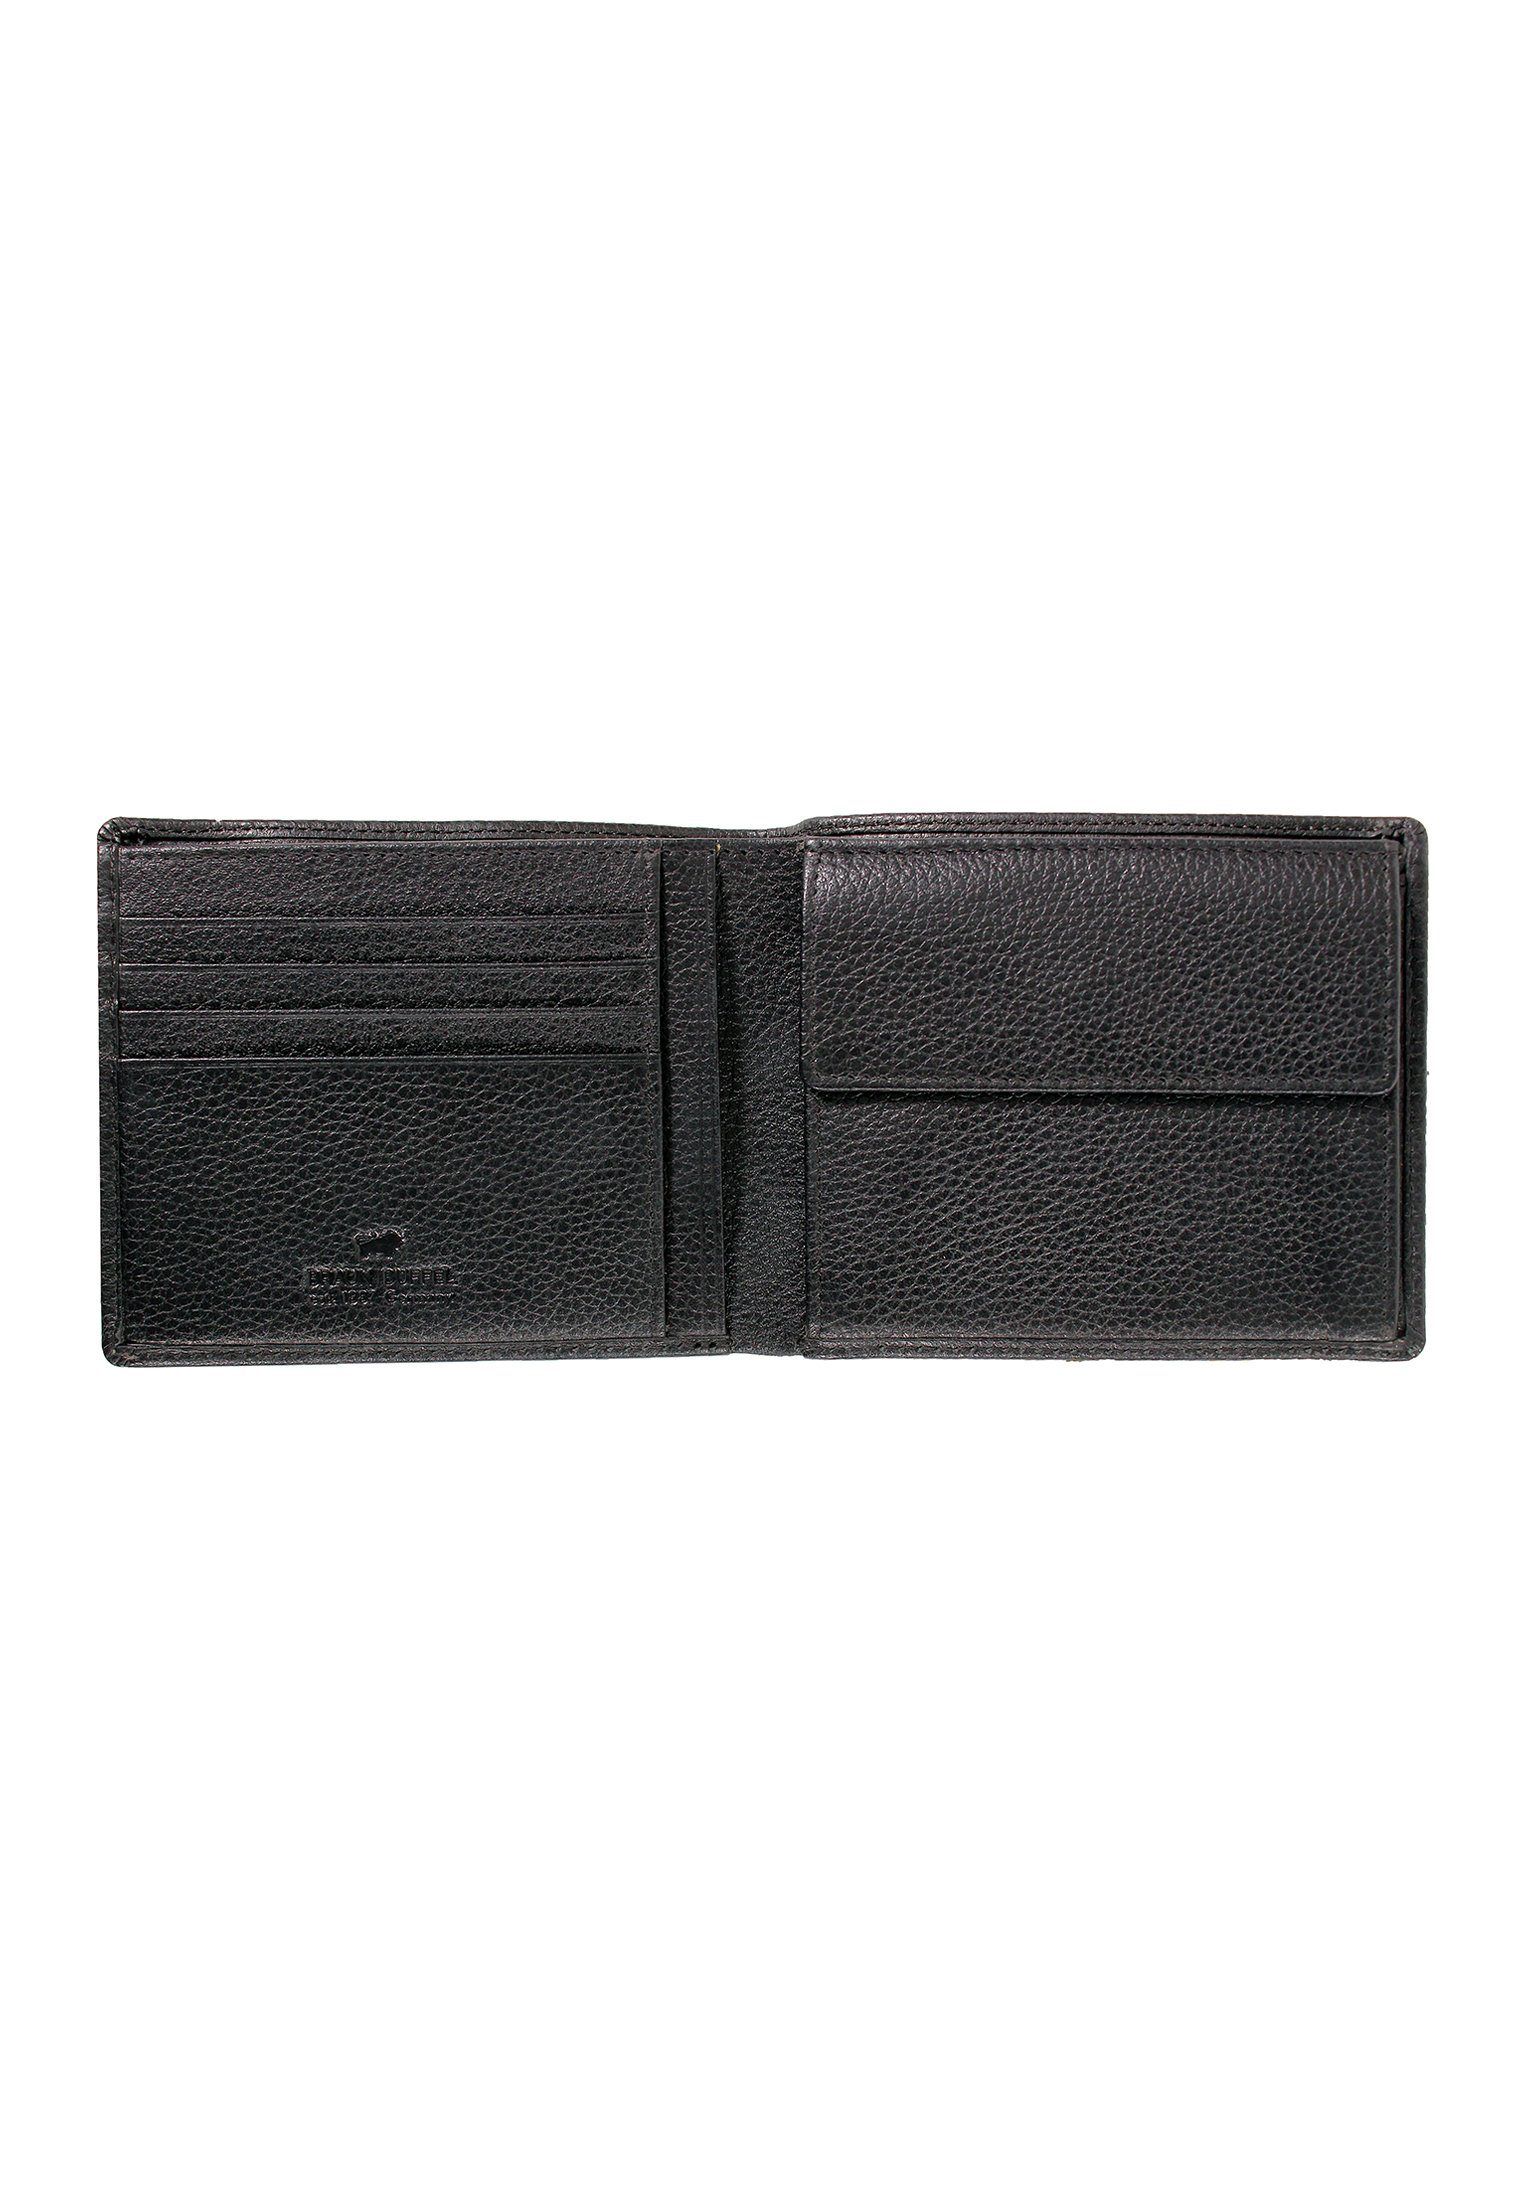 RFID-Schutz Geldbörse PRATO, Black mit Büffel Braun